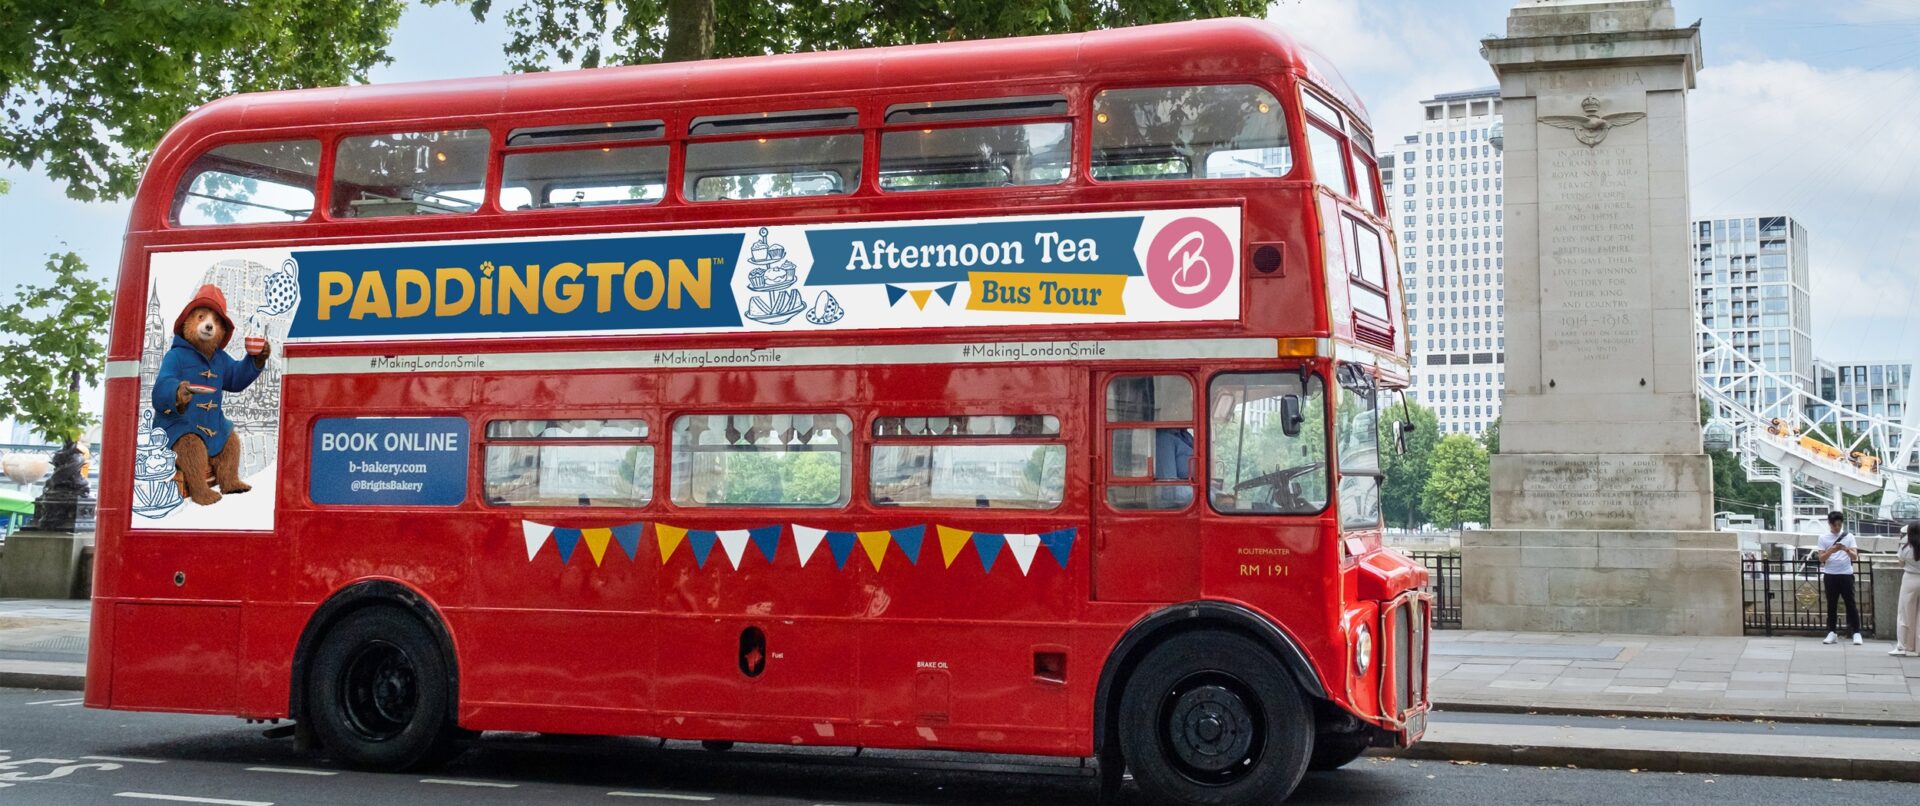 afternoon-tea-paddington-bus-family-experience